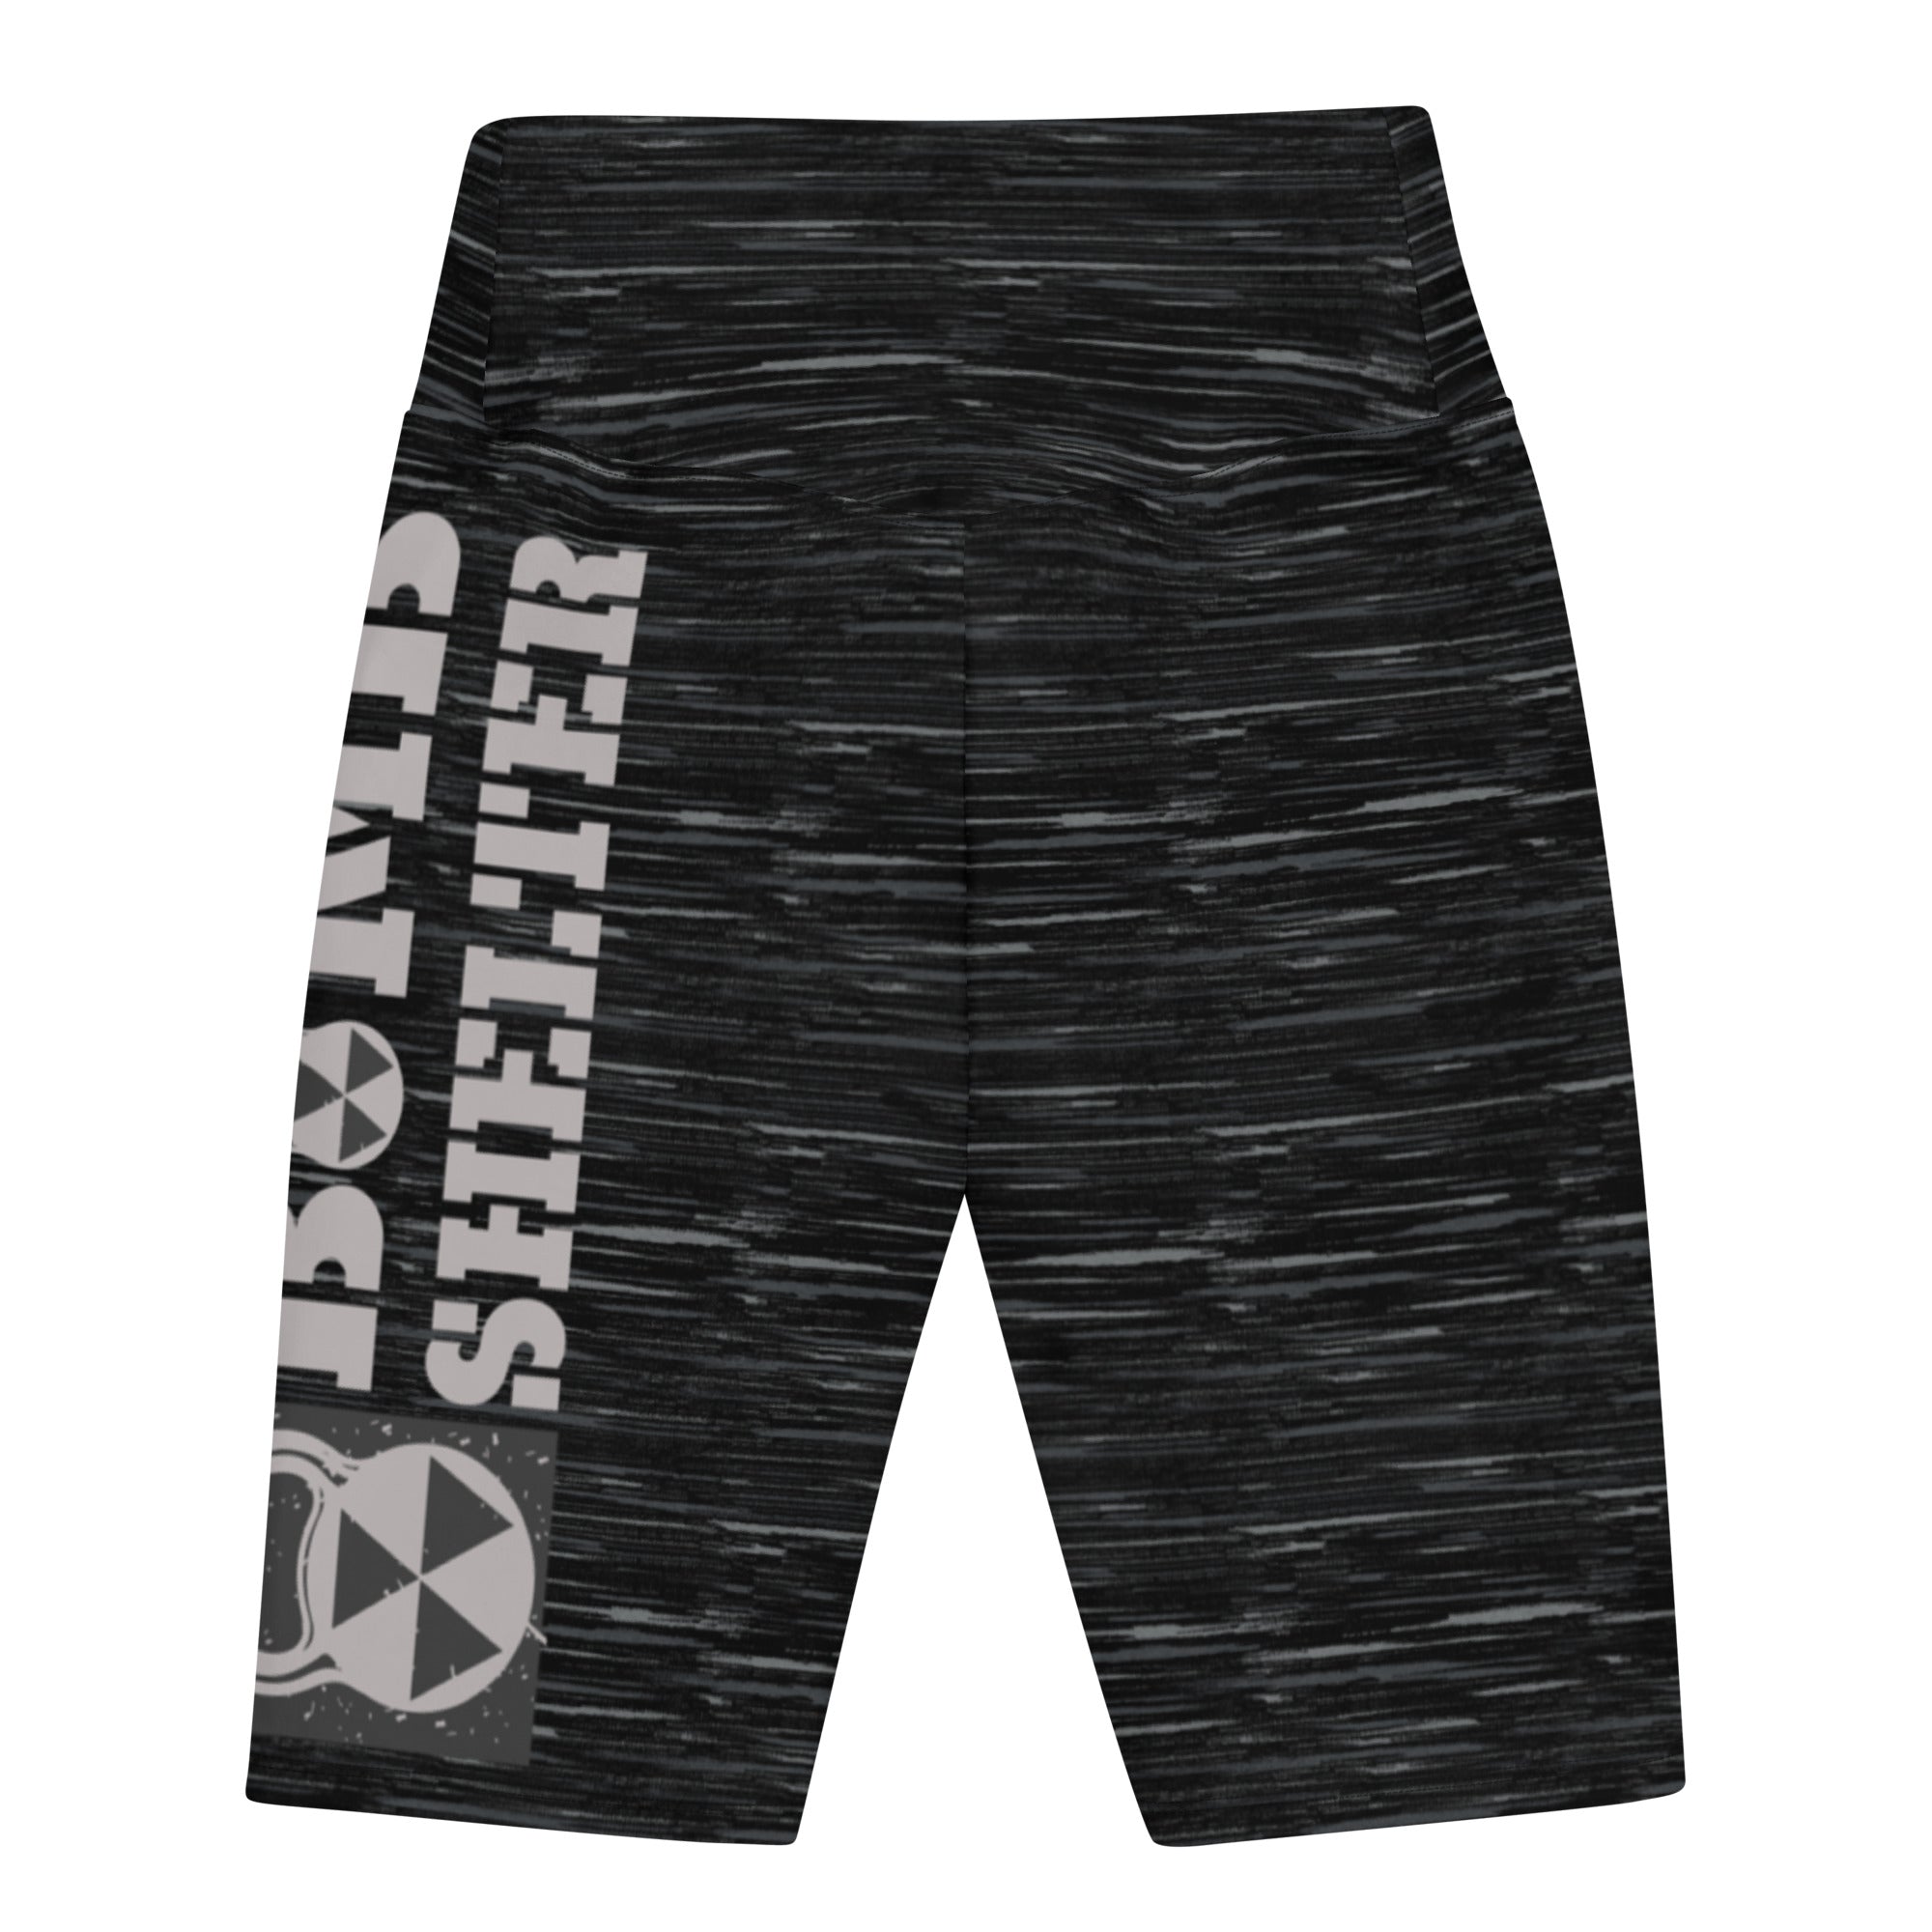 Men’s Heathered Black/Gray Biker Shorts